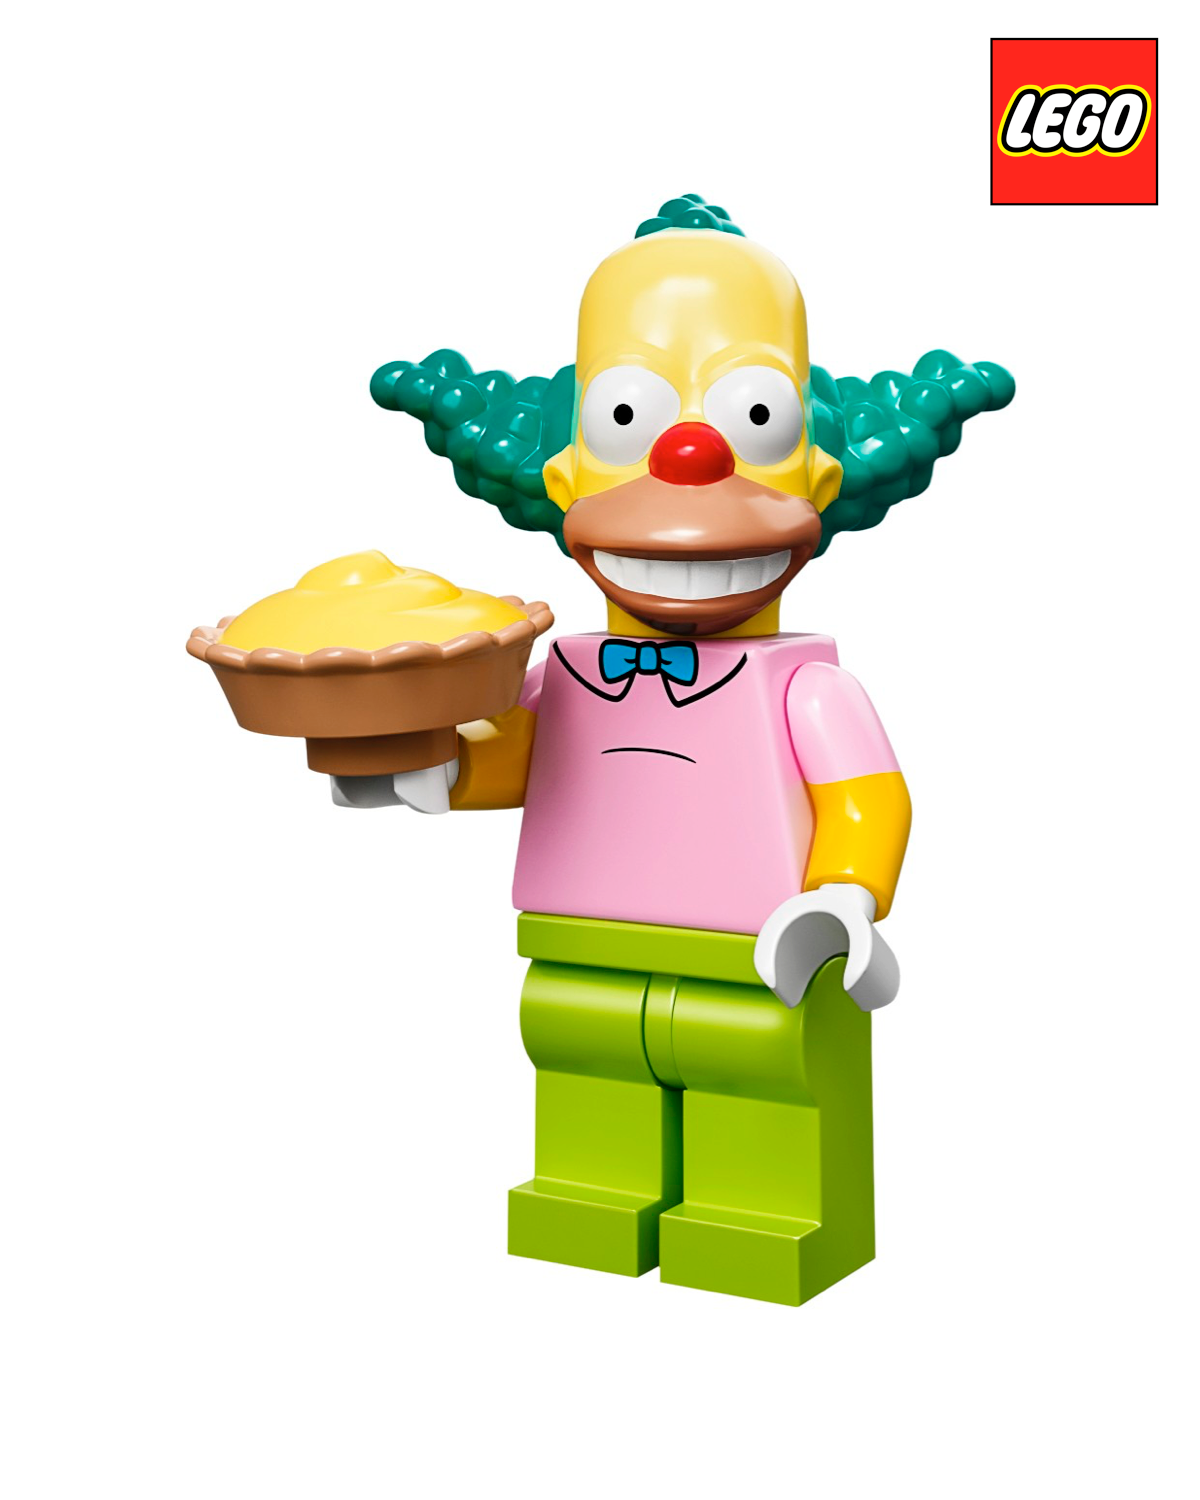 Krusty the Clown - The Simpsons - Series 1  | LEGO Minifigure | NEW CMF